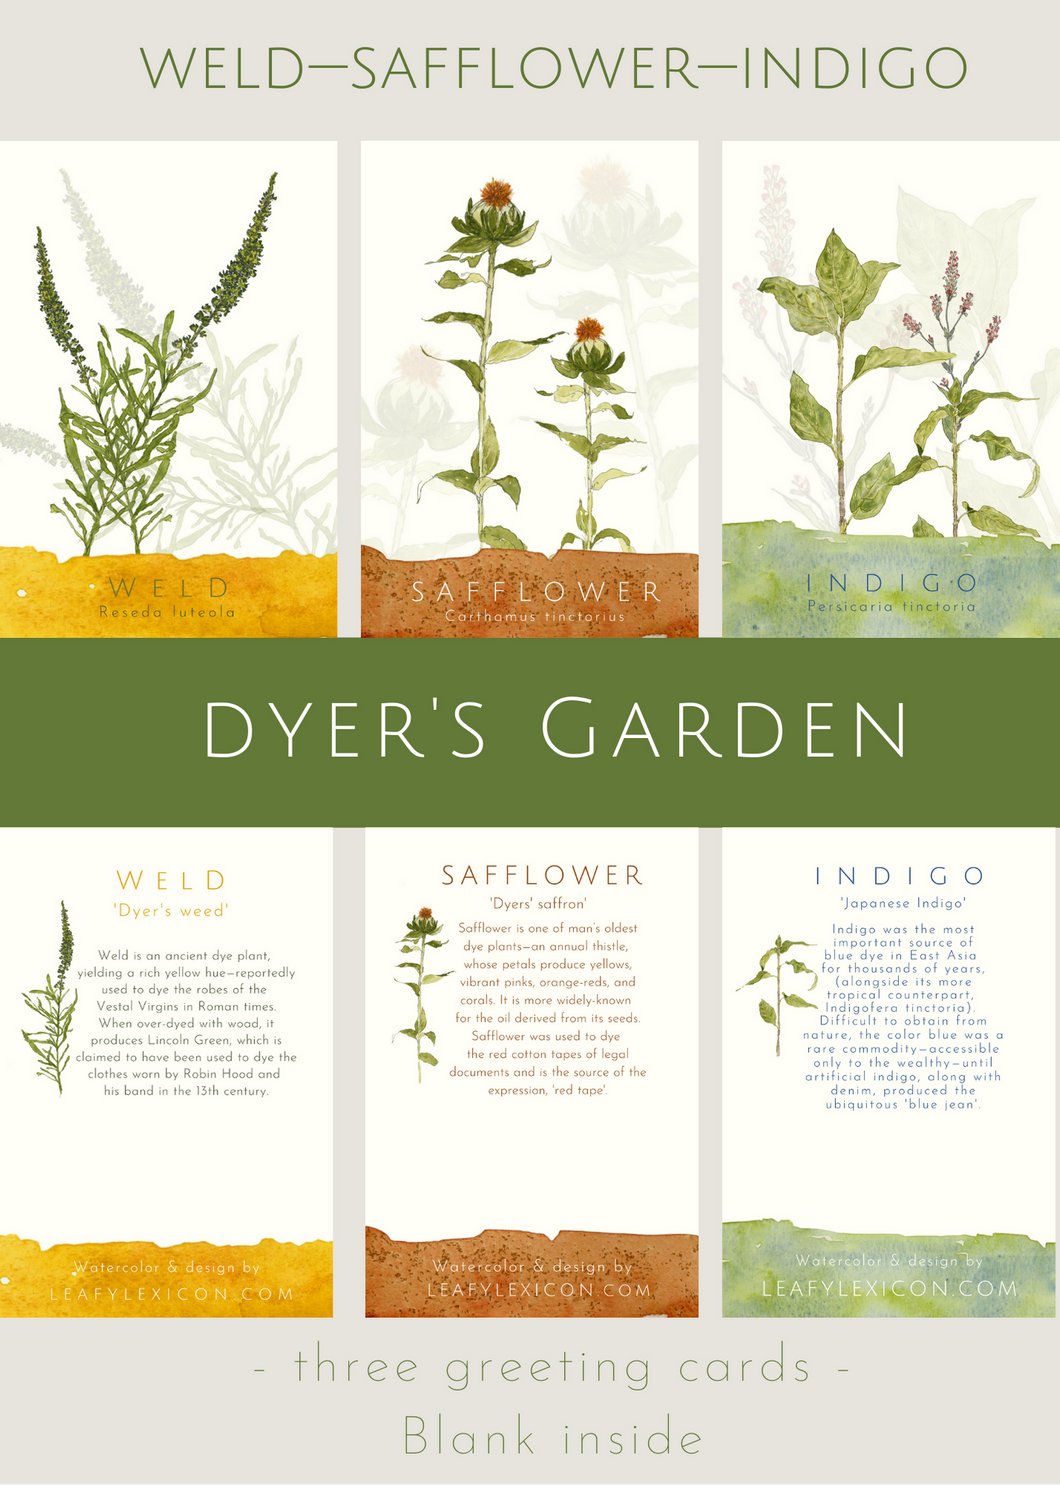 The Dyer's Garden